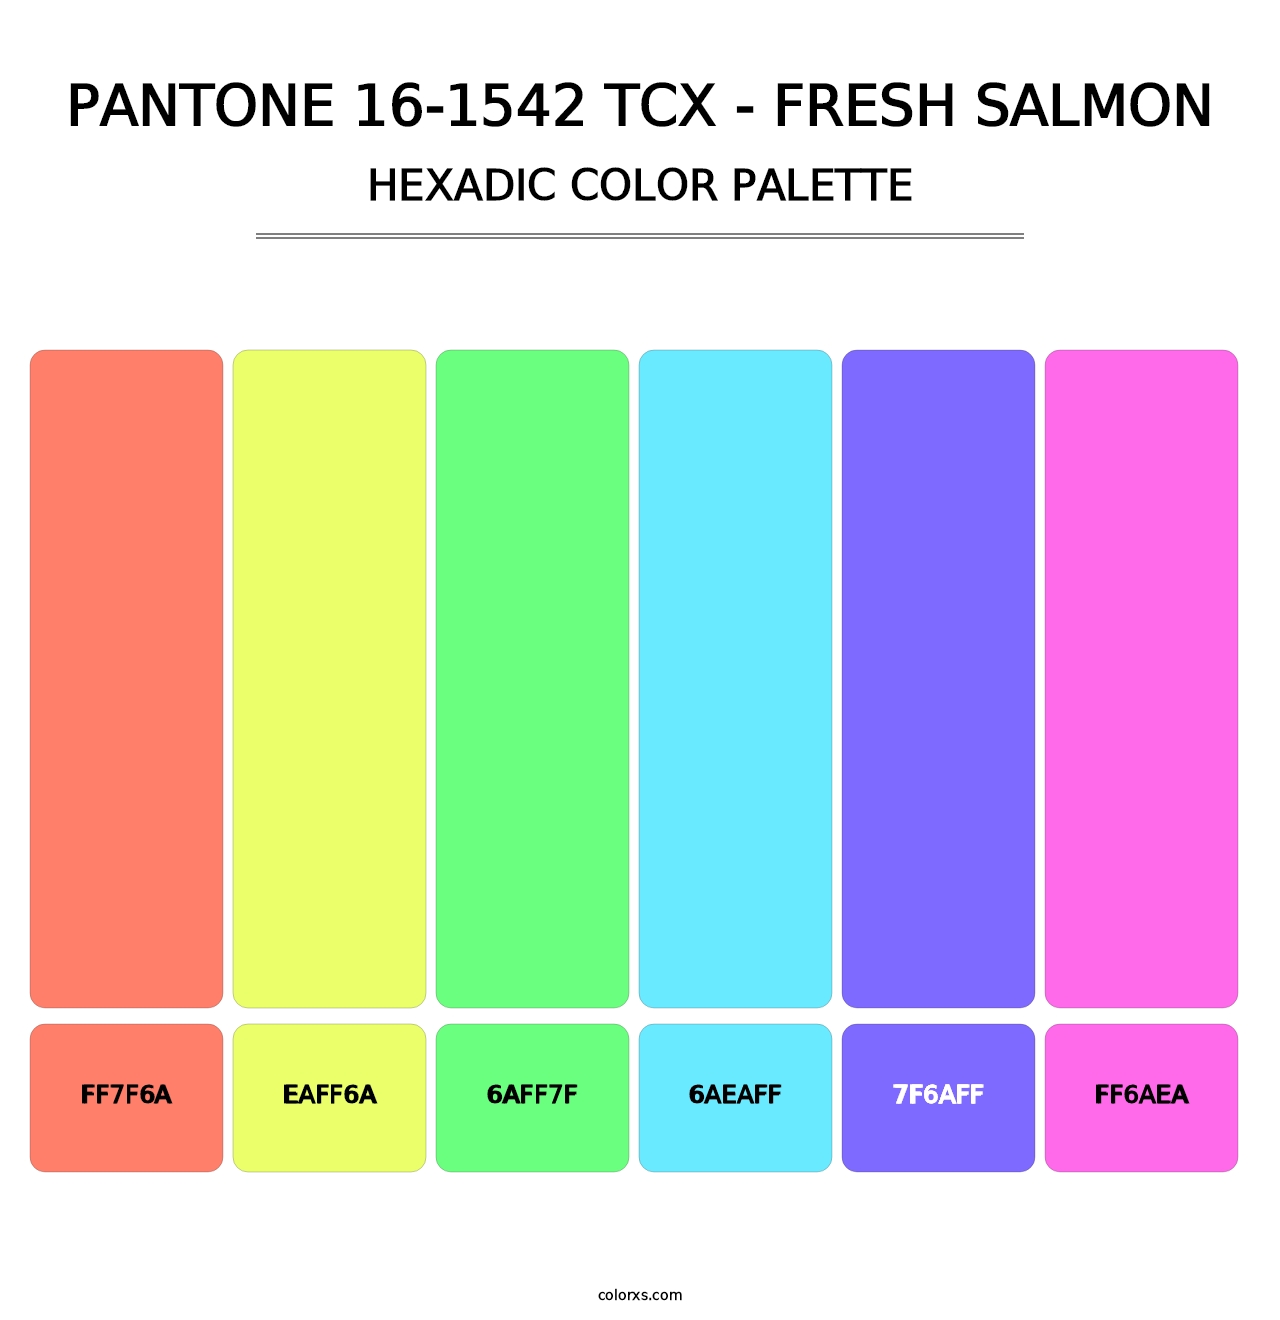 PANTONE 16-1542 TCX - Fresh Salmon - Hexadic Color Palette